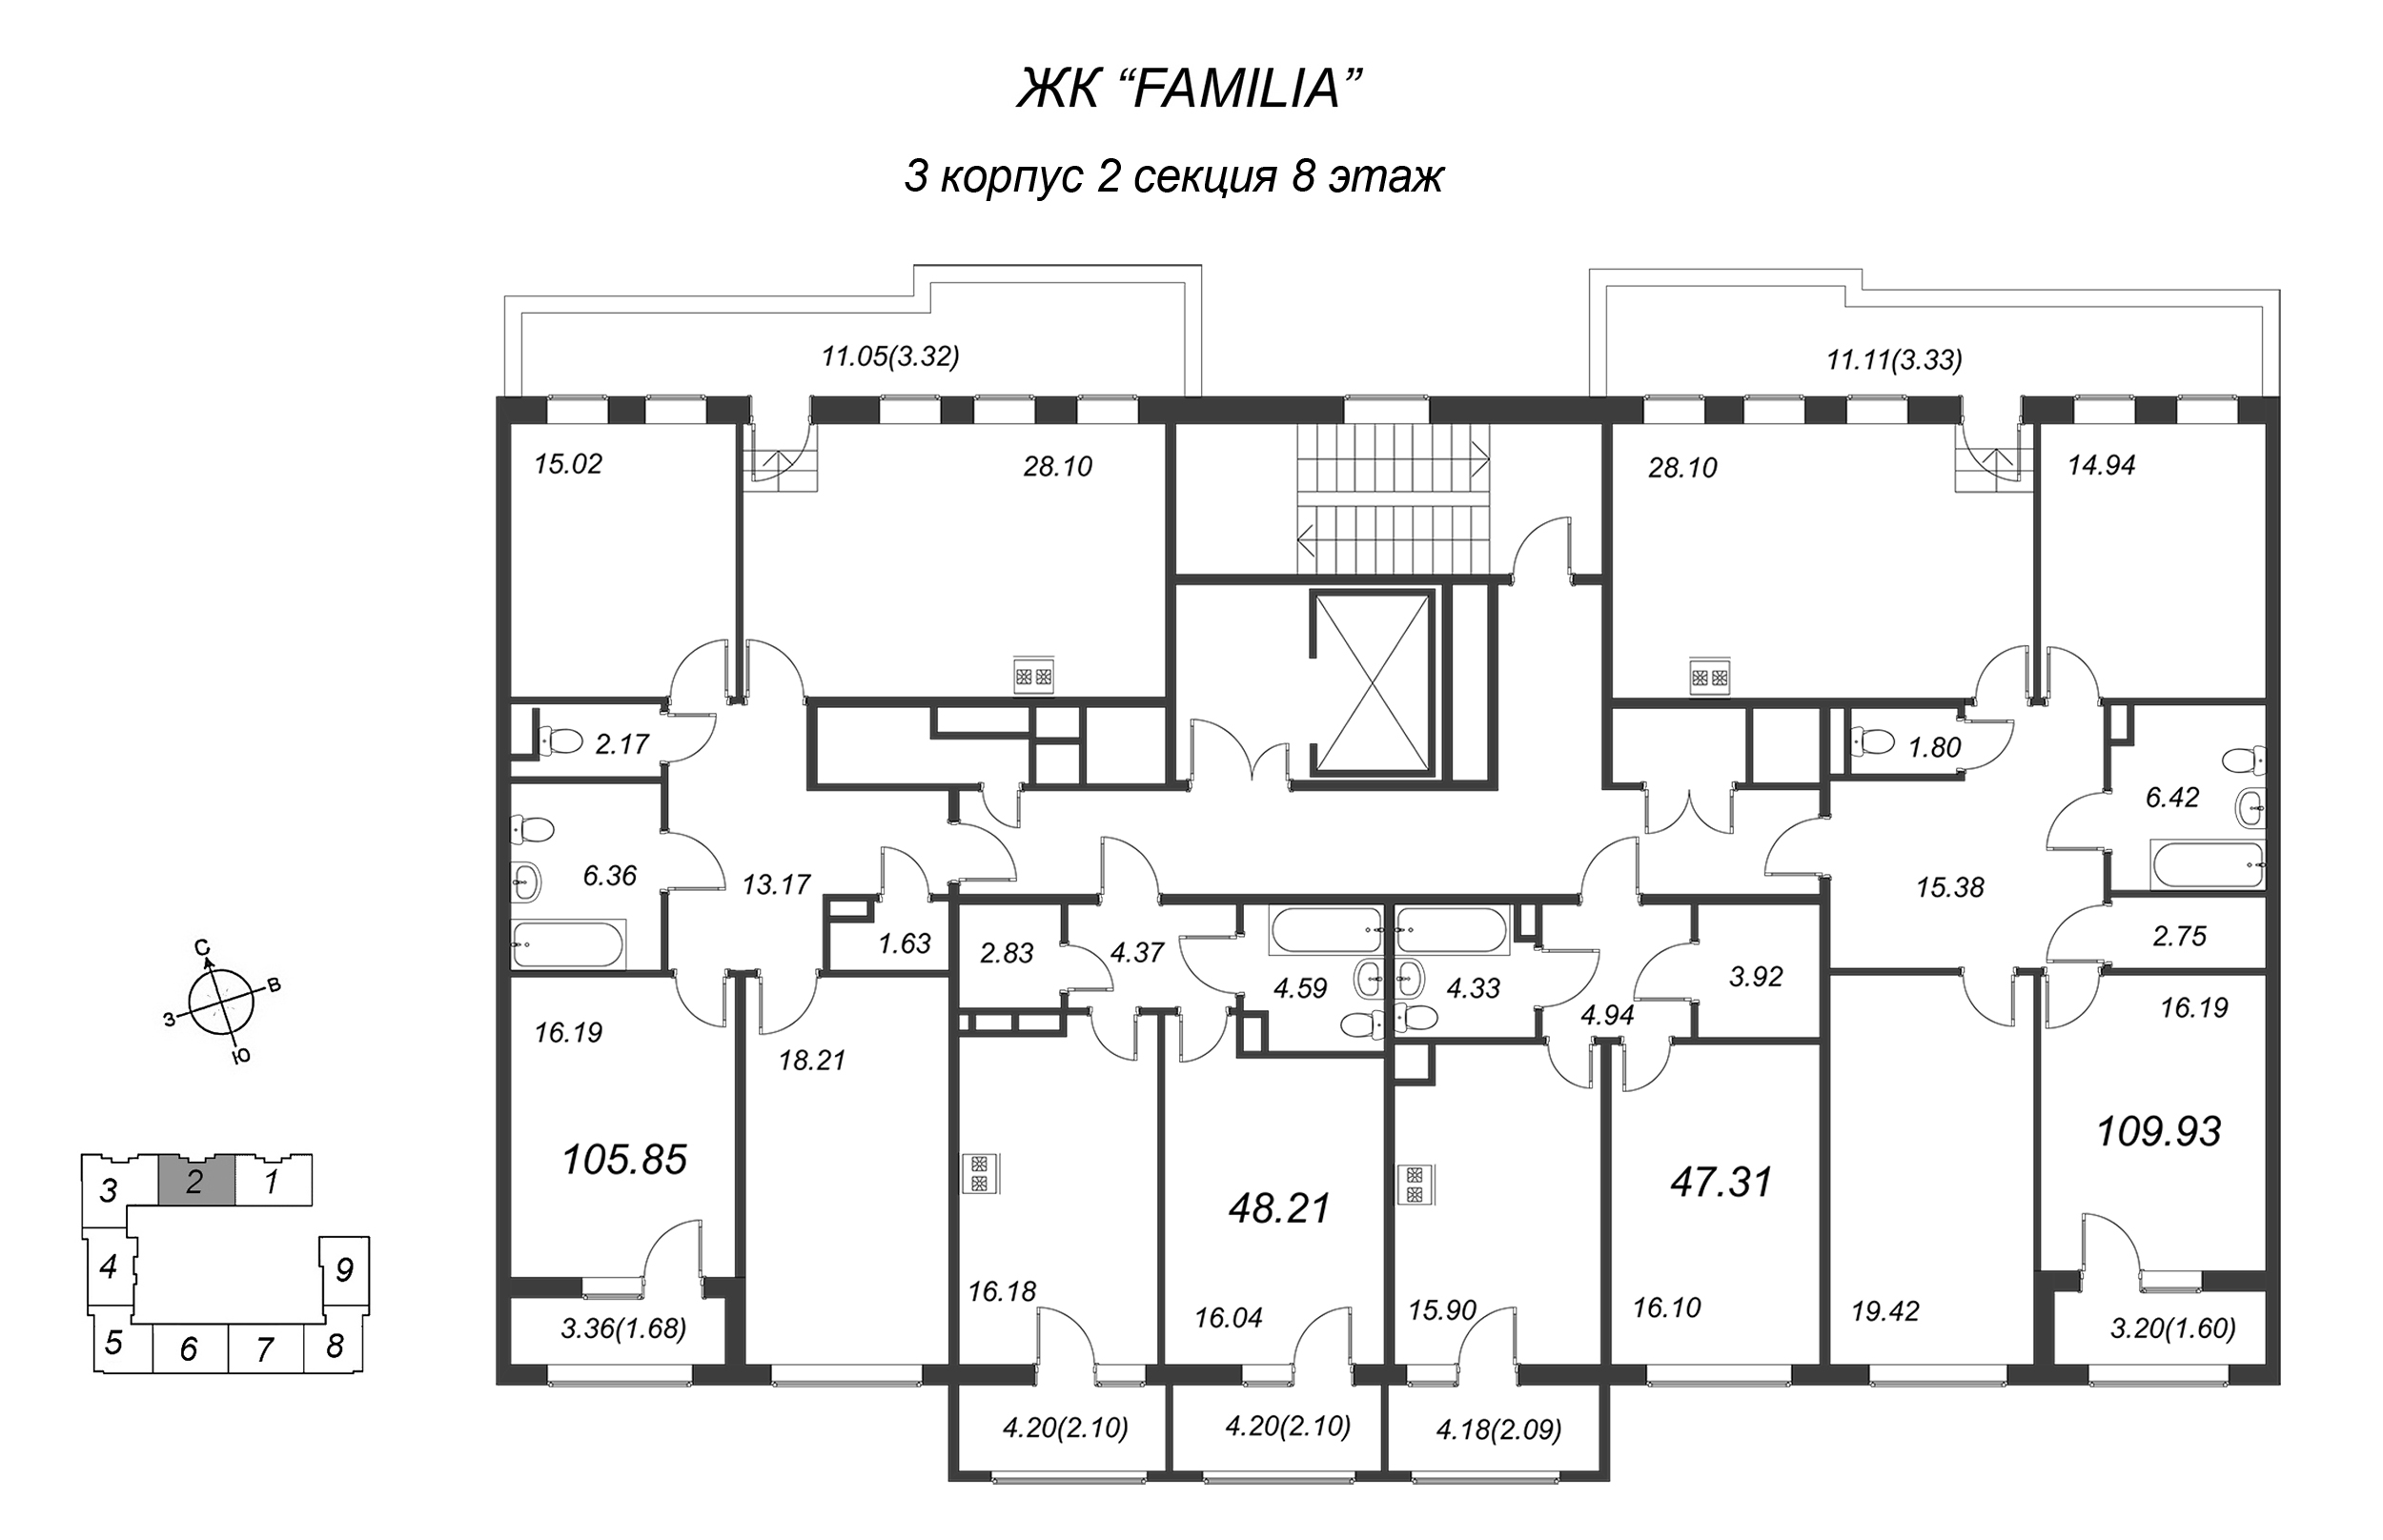 2-комнатная (Евро) квартира, 47.2 м² в ЖК "FAMILIA" - планировка этажа